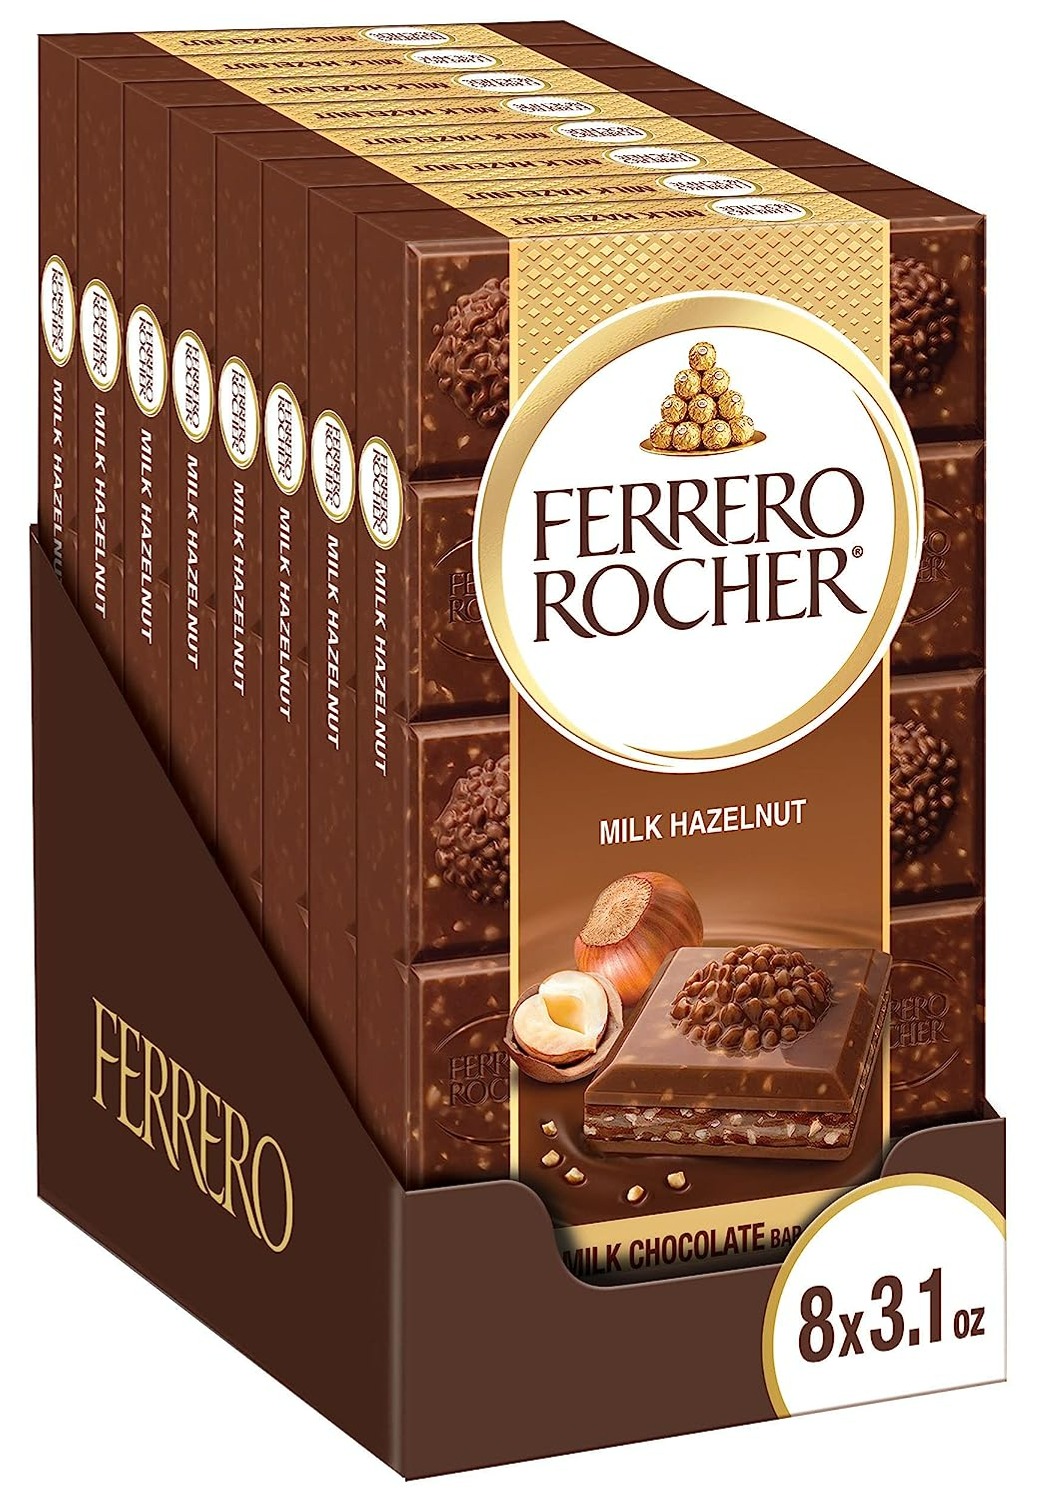 8-Pack 3.1-Oz Ferrero Rocher Premium Milk Chocolate Hazelnut Bars $13.94 + Free Shipping w/ Prime or on orders over $35